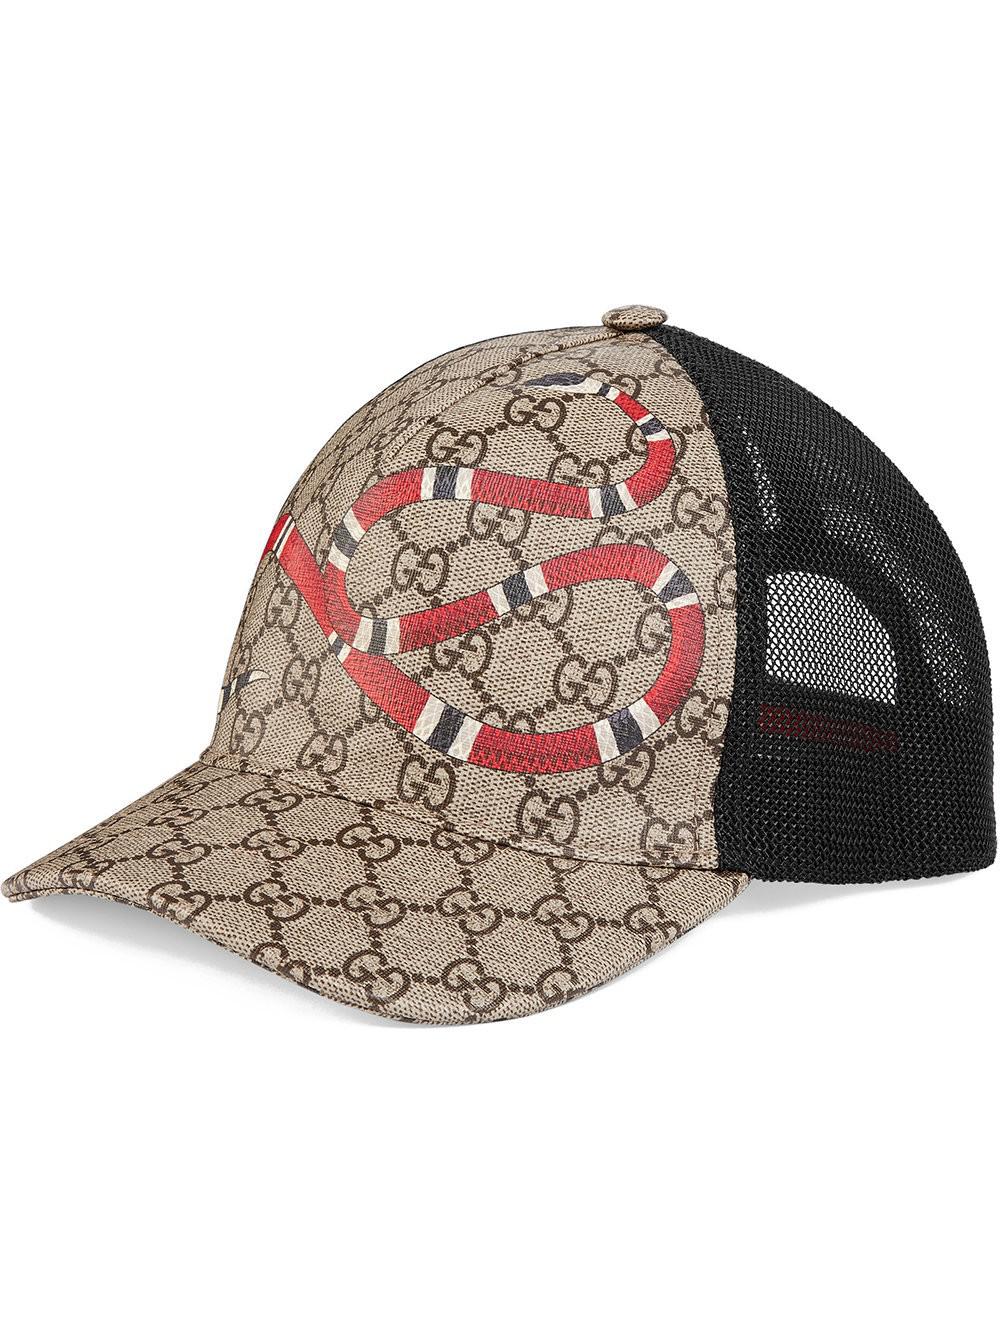 gucci snake cap